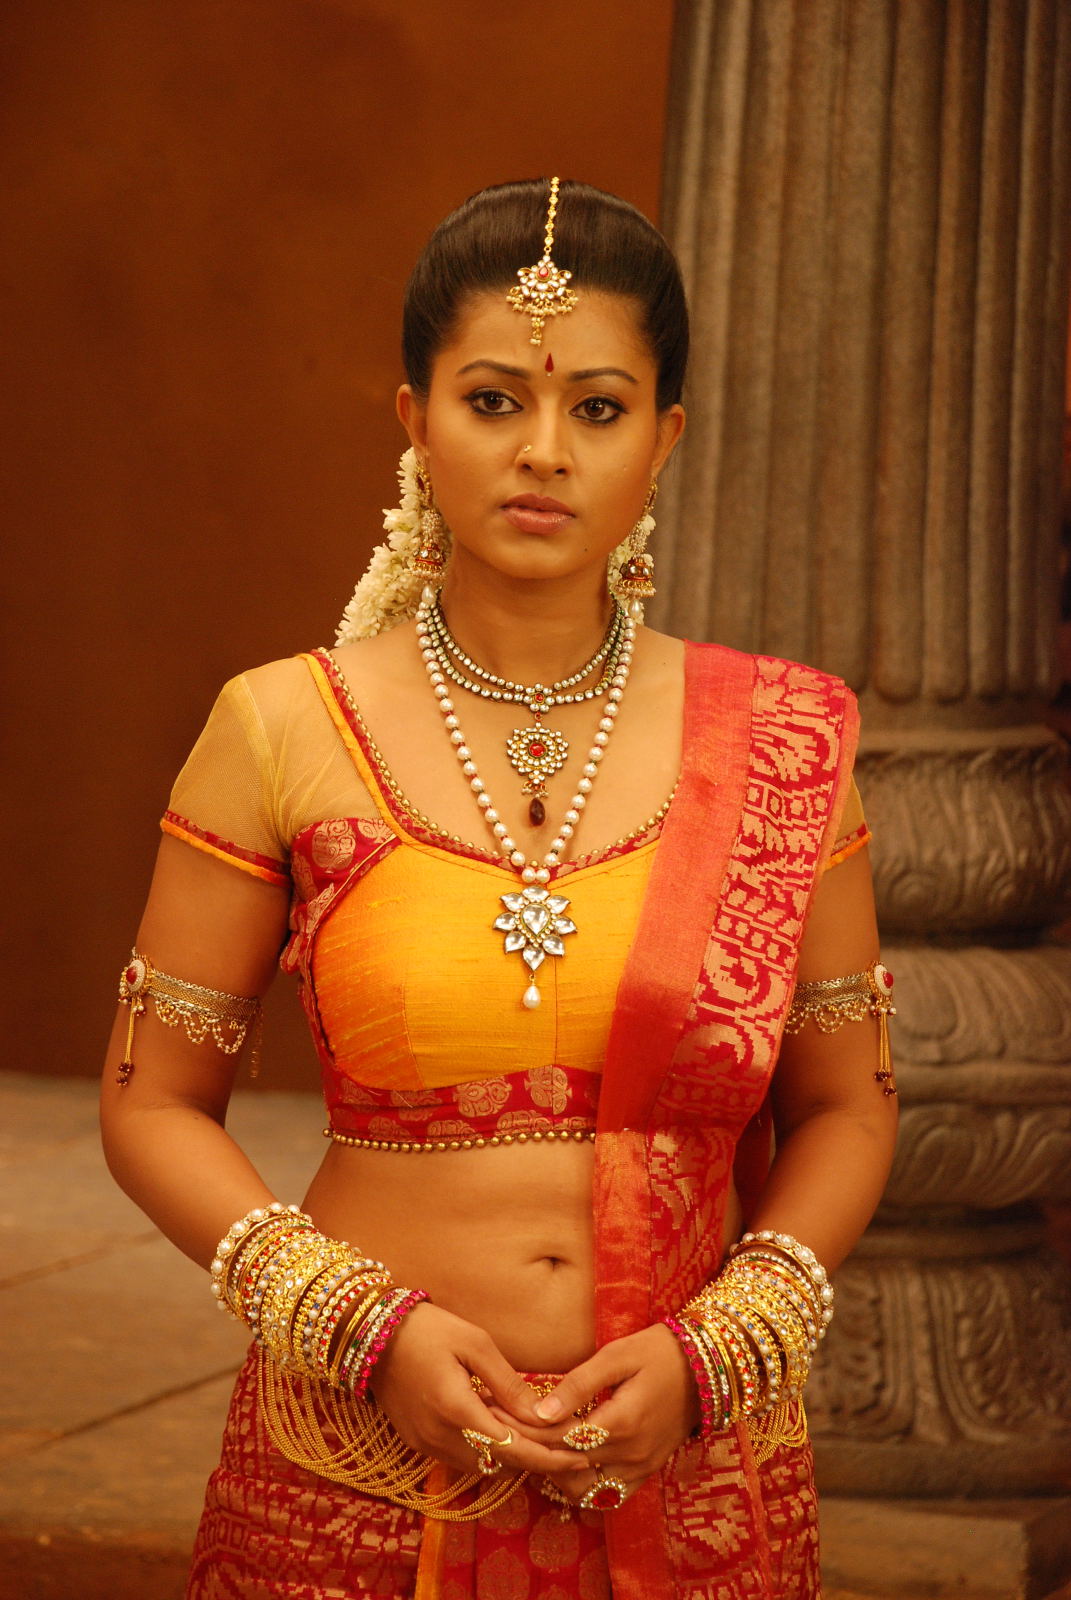 Tamil Actress Gorgeous Sneha Beautiful Hot Stills Ponnar Shankar Photo